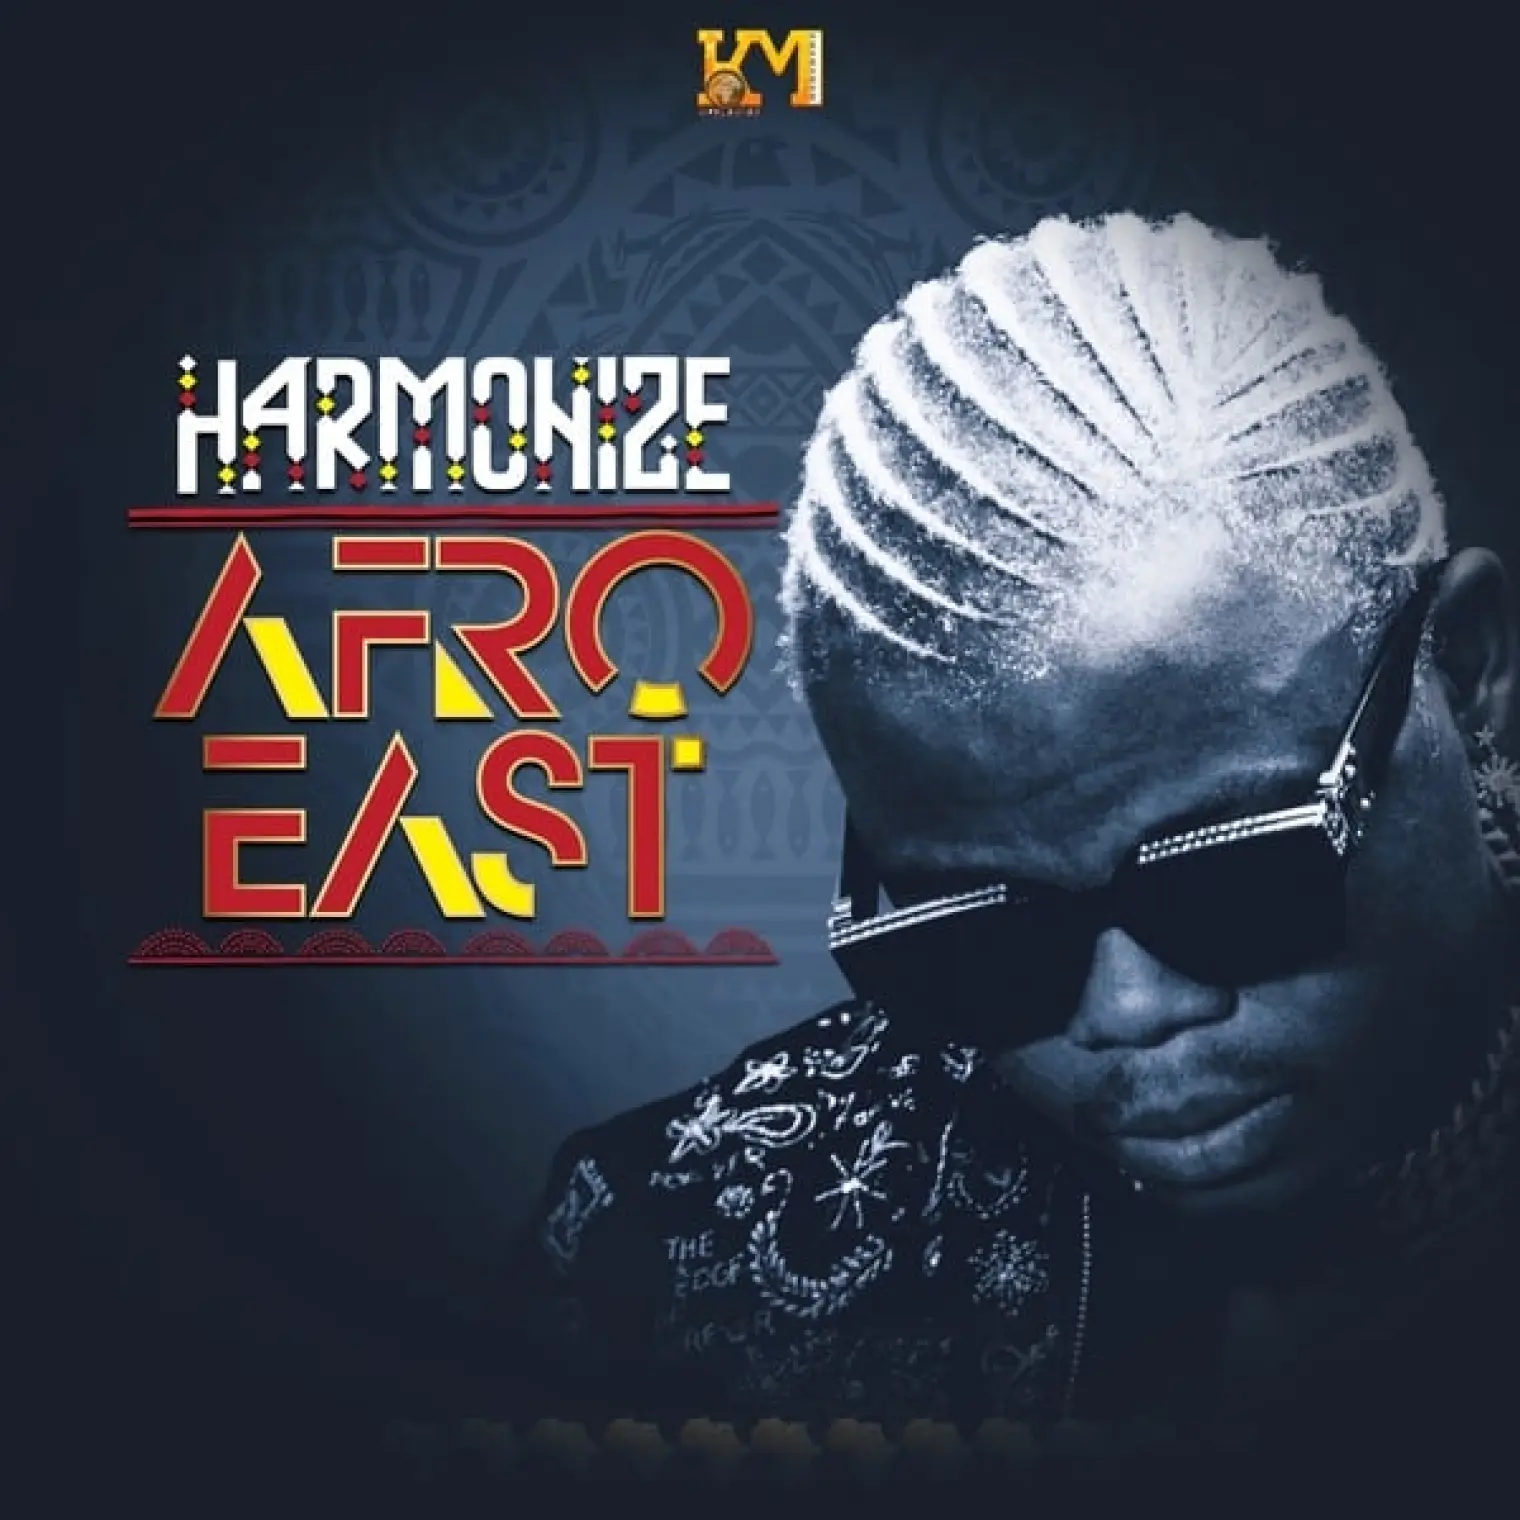 Afro East -  Harmonize 